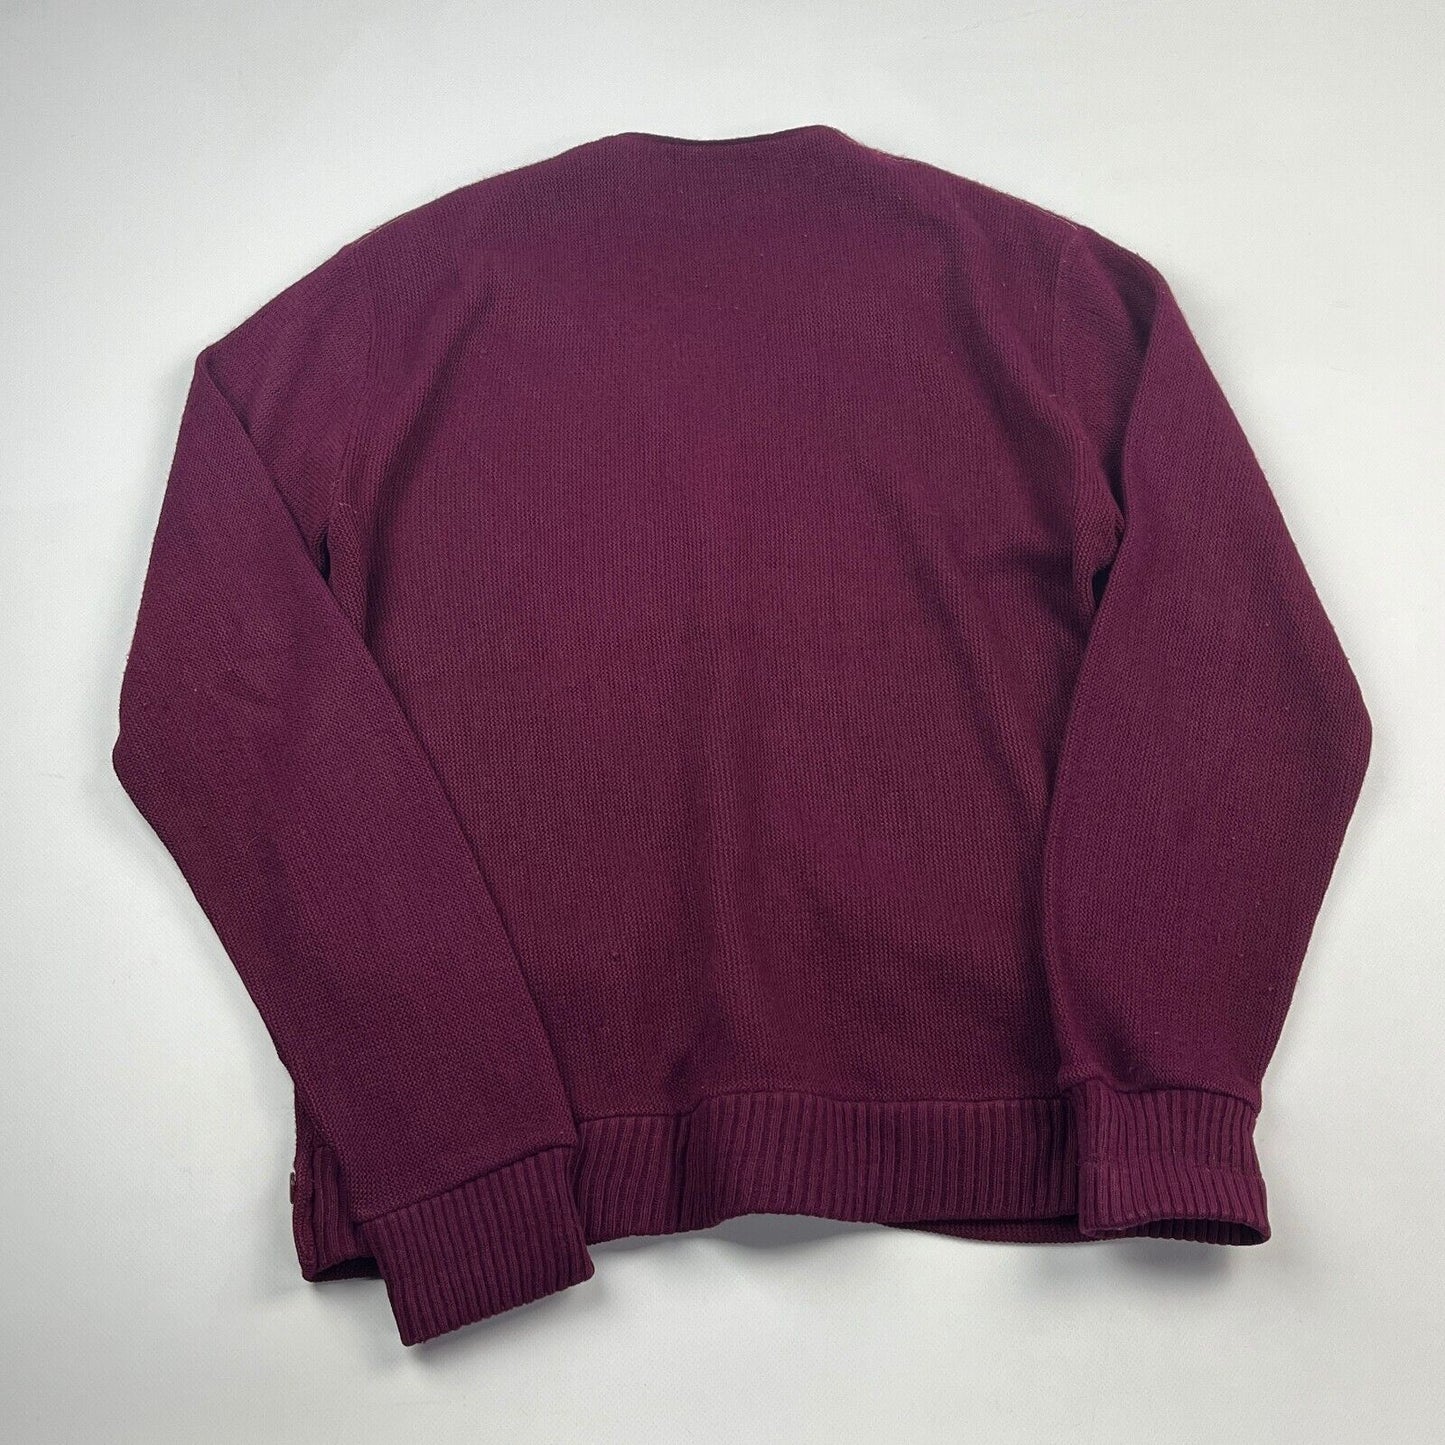 VINTAGE 90s Blank Maroon Knit Cardigan Sweater sz Medium Men